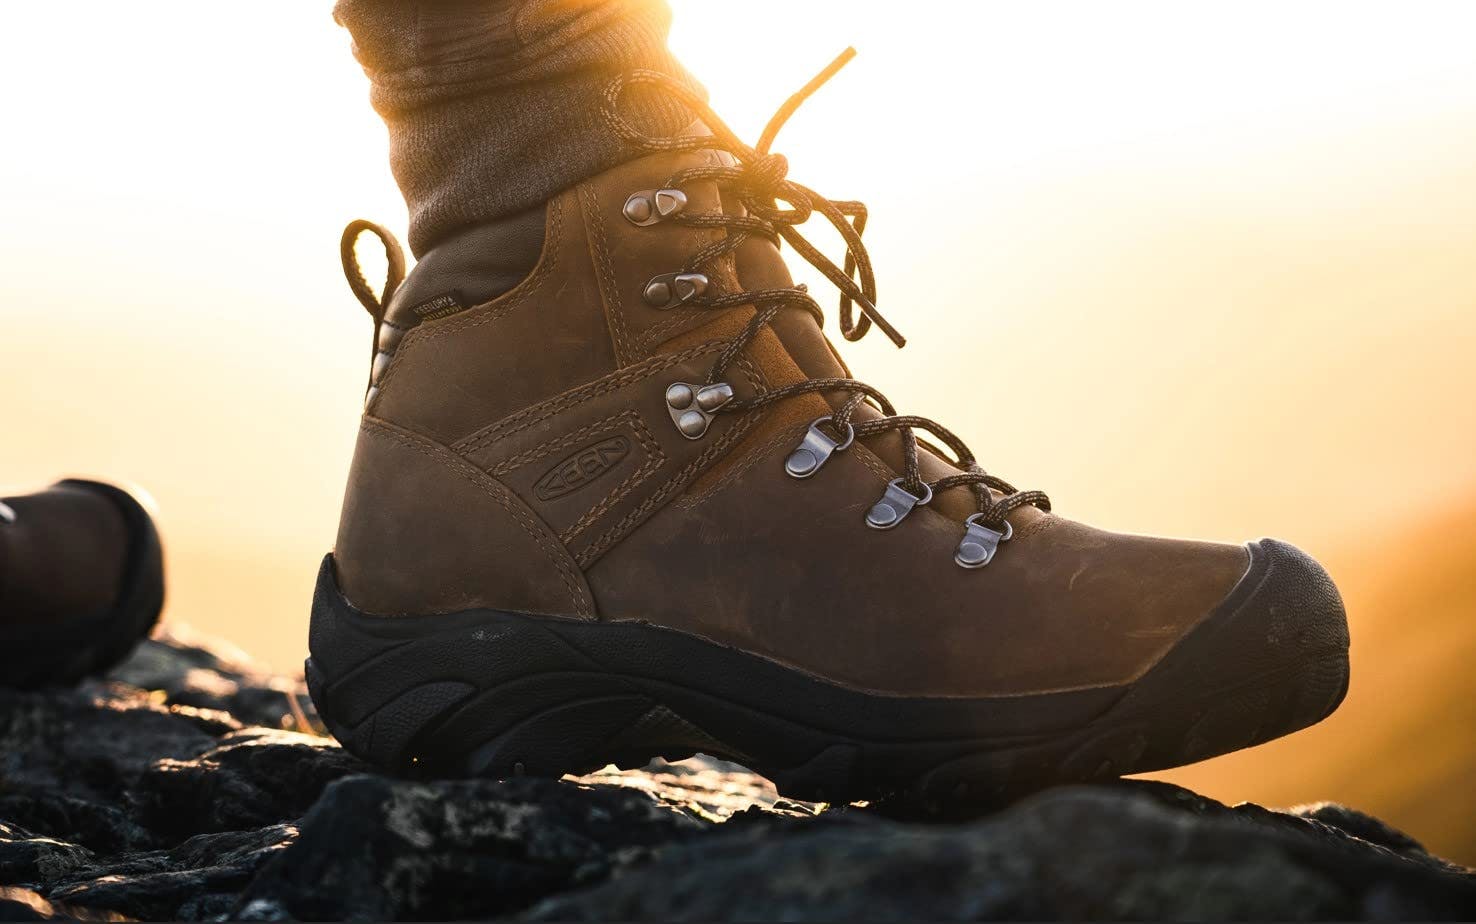 Keen Men's Pyrenees Hiking Boots